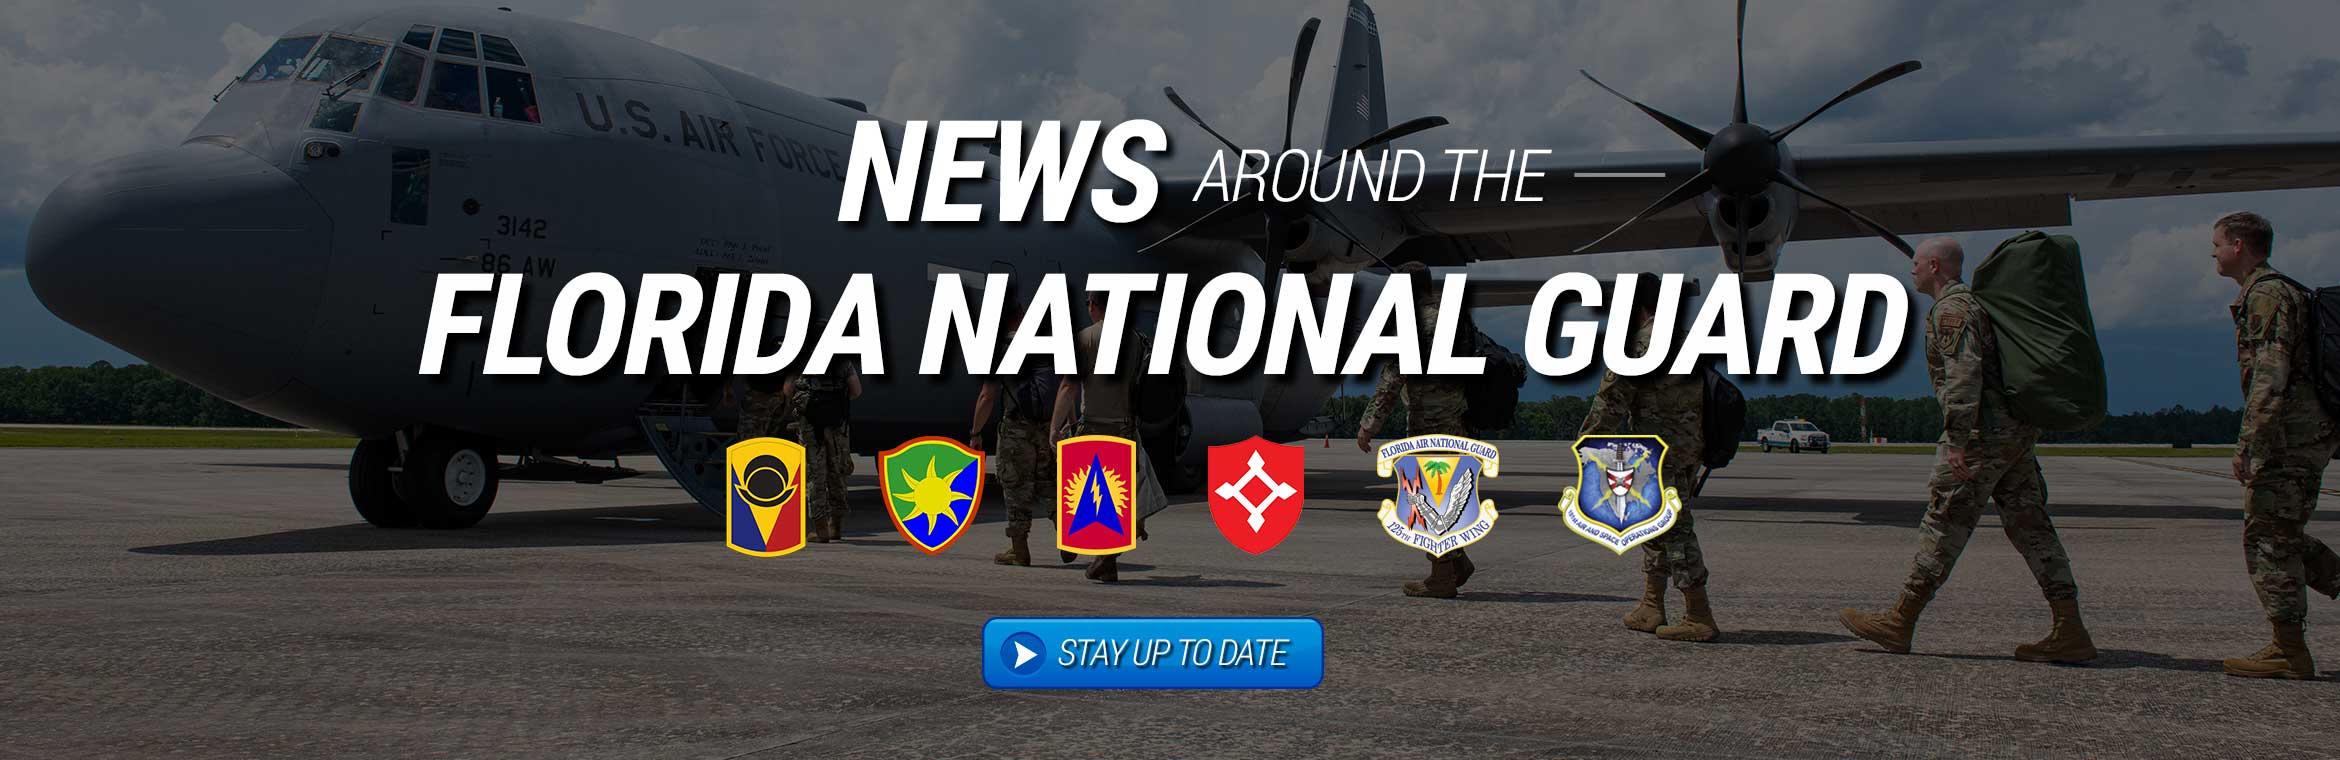 News Around the Florida National Guard